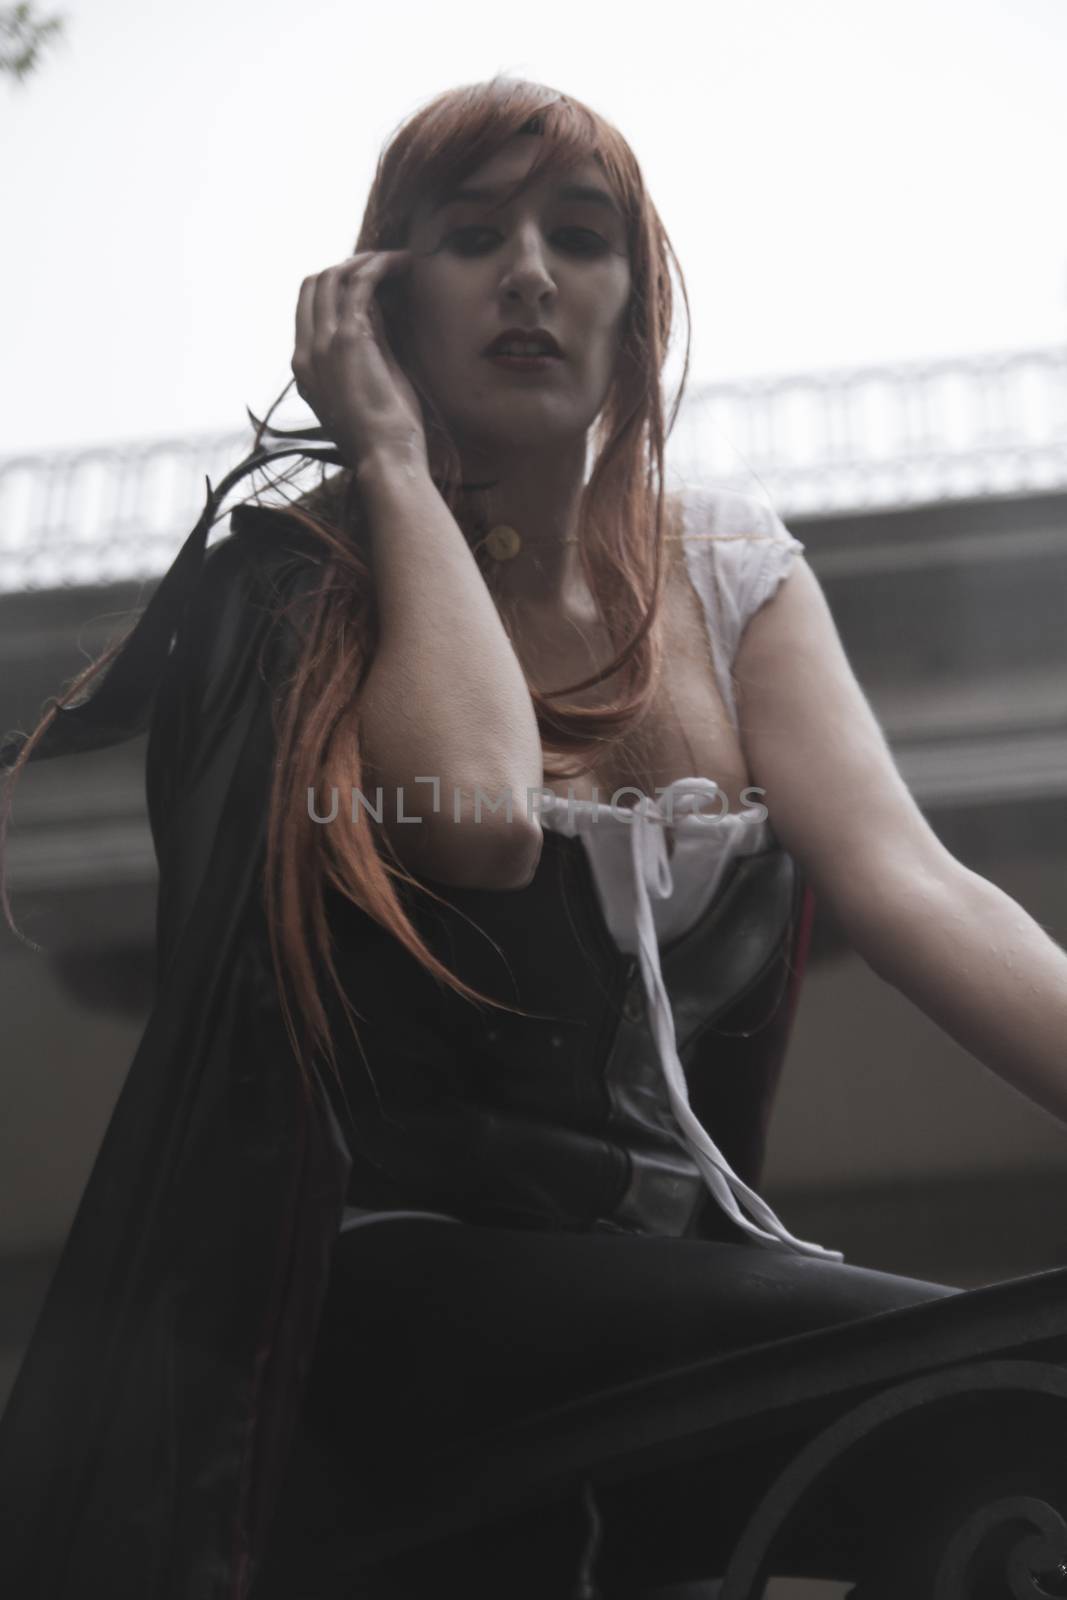 Dark beauty under rain, red hair woman with long black coat